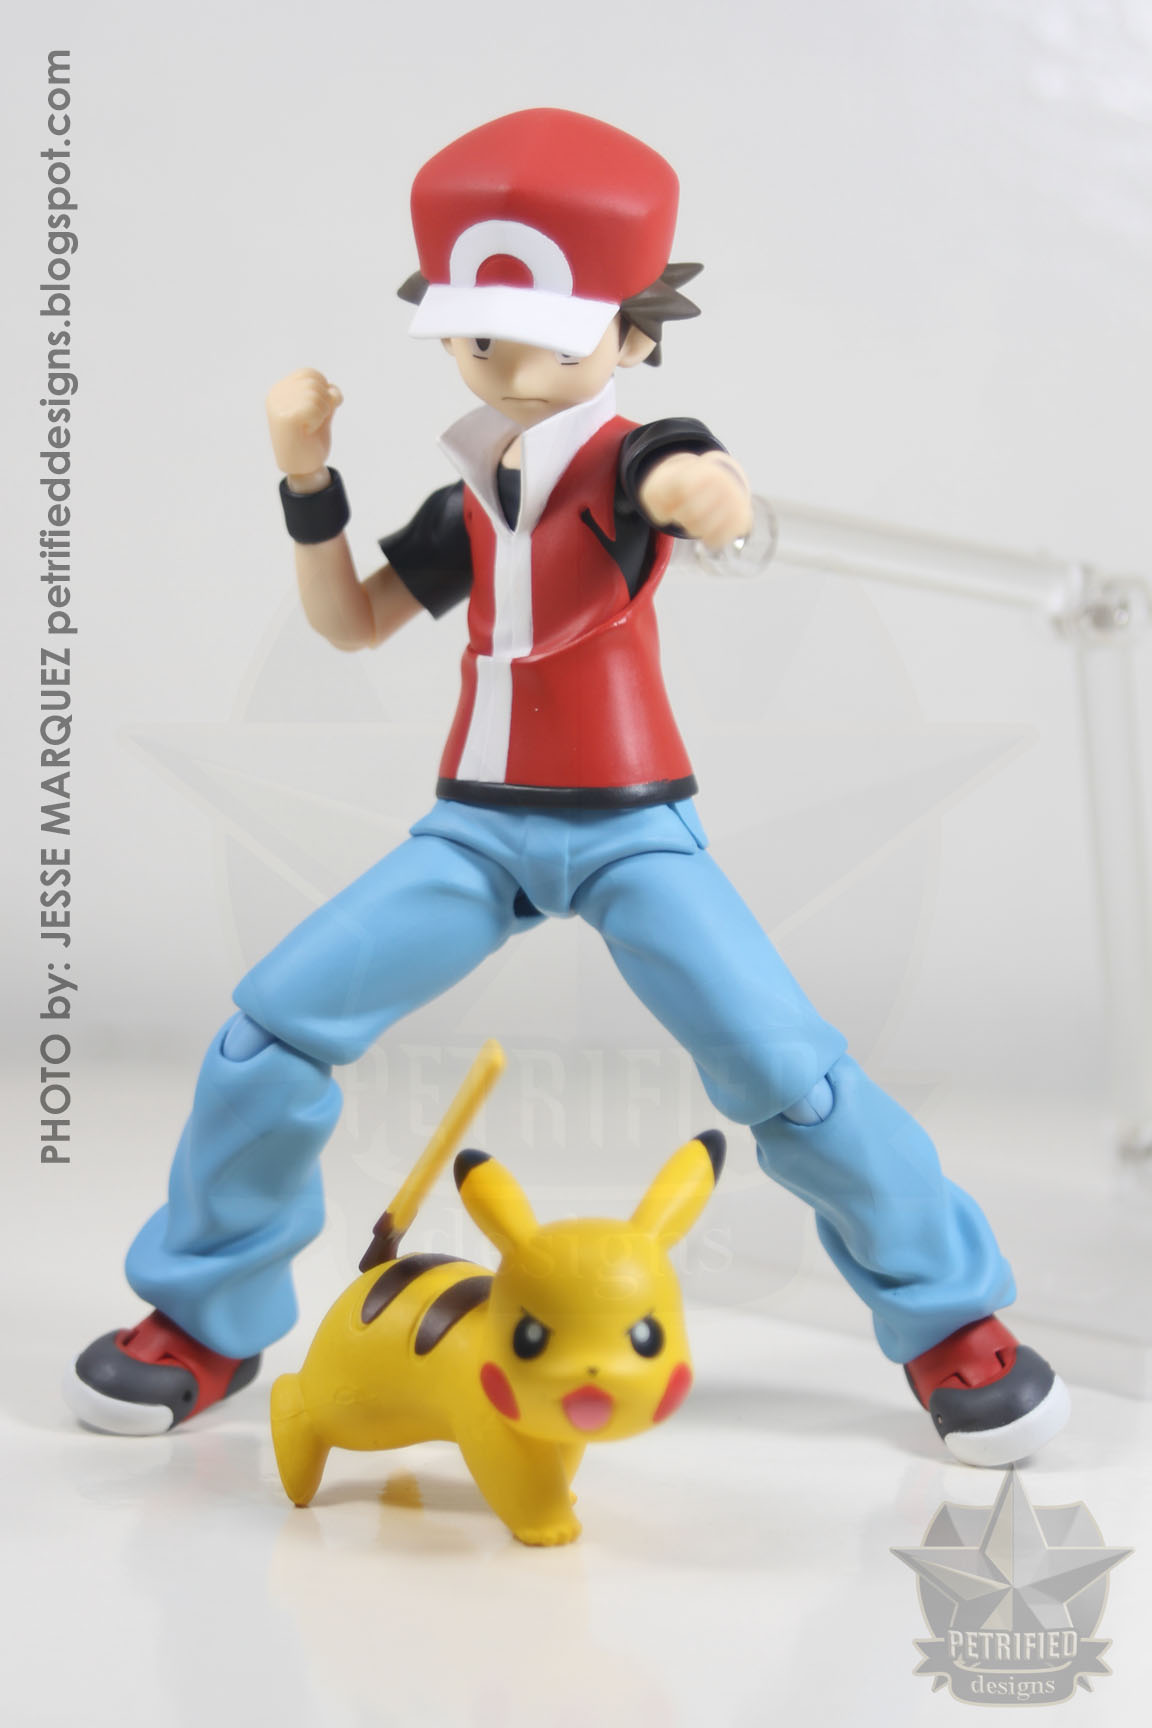 Good Smile Pokemon: Red Figma Action Figure with Pikachu : Buy